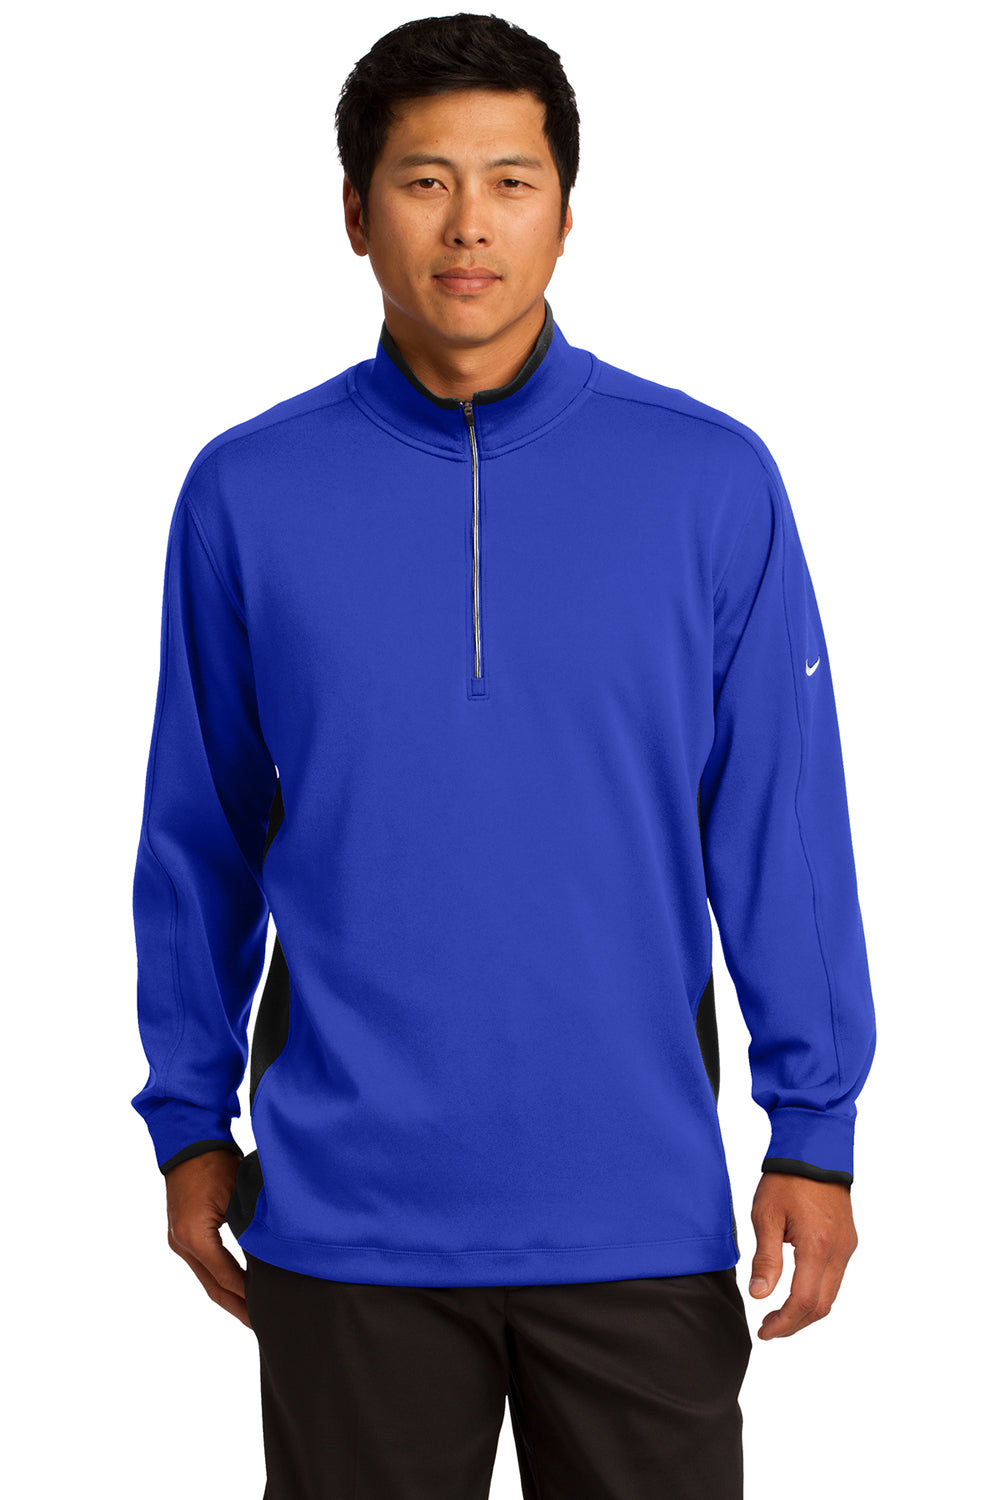 Nike 578673 Mens Dri-Fit Moisture Wicking 1/4 Zip Sweatshirt Royal Blue/Black/White Model Front